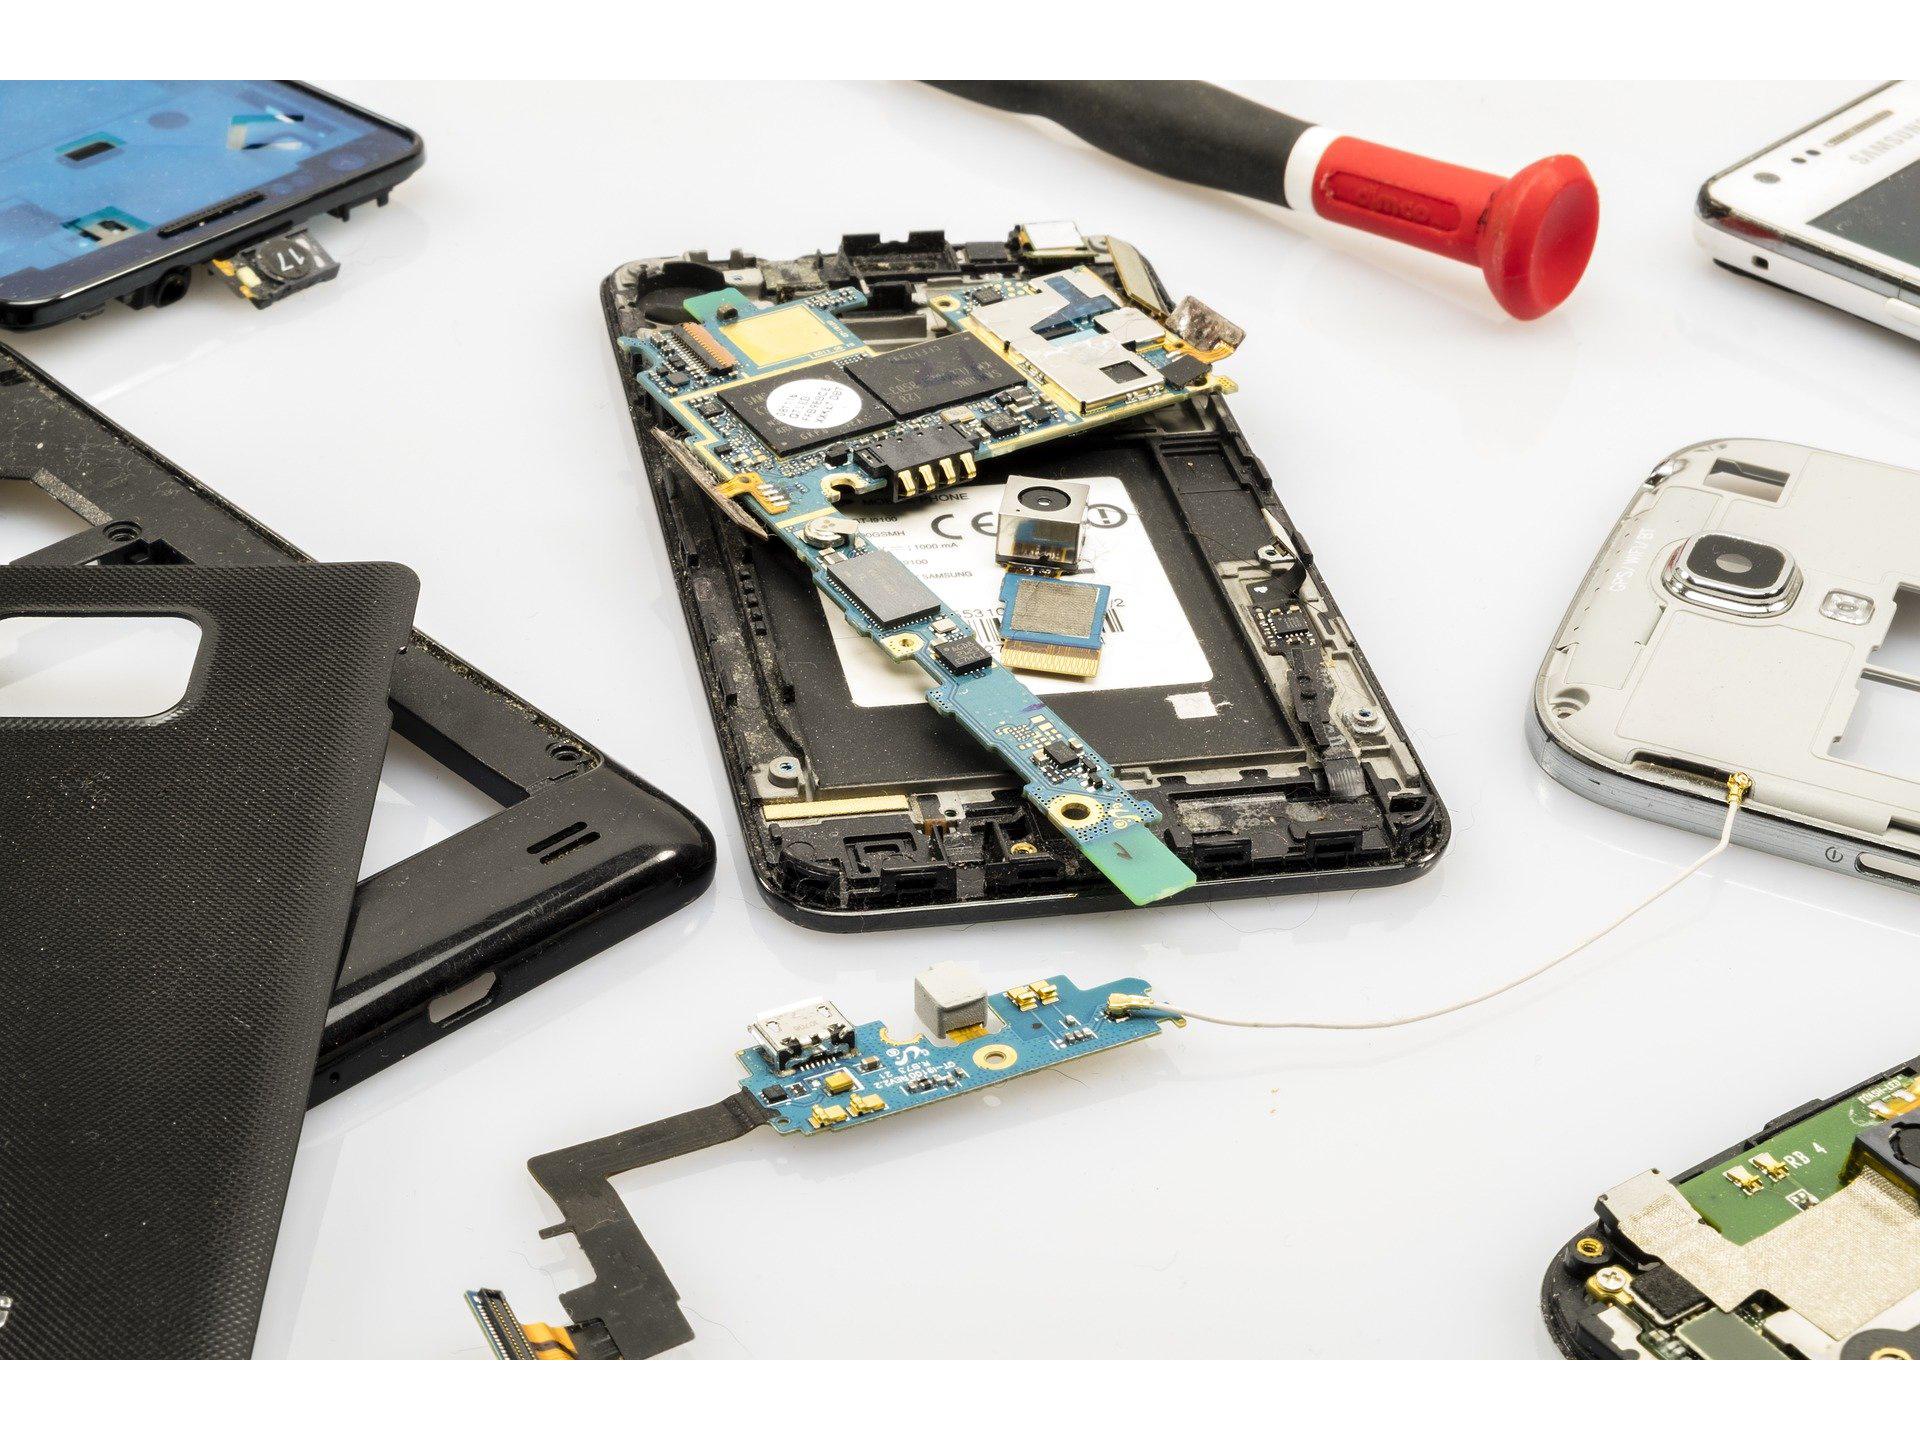 Bilder Mr. Smart Phone Repair, Handyreparatur